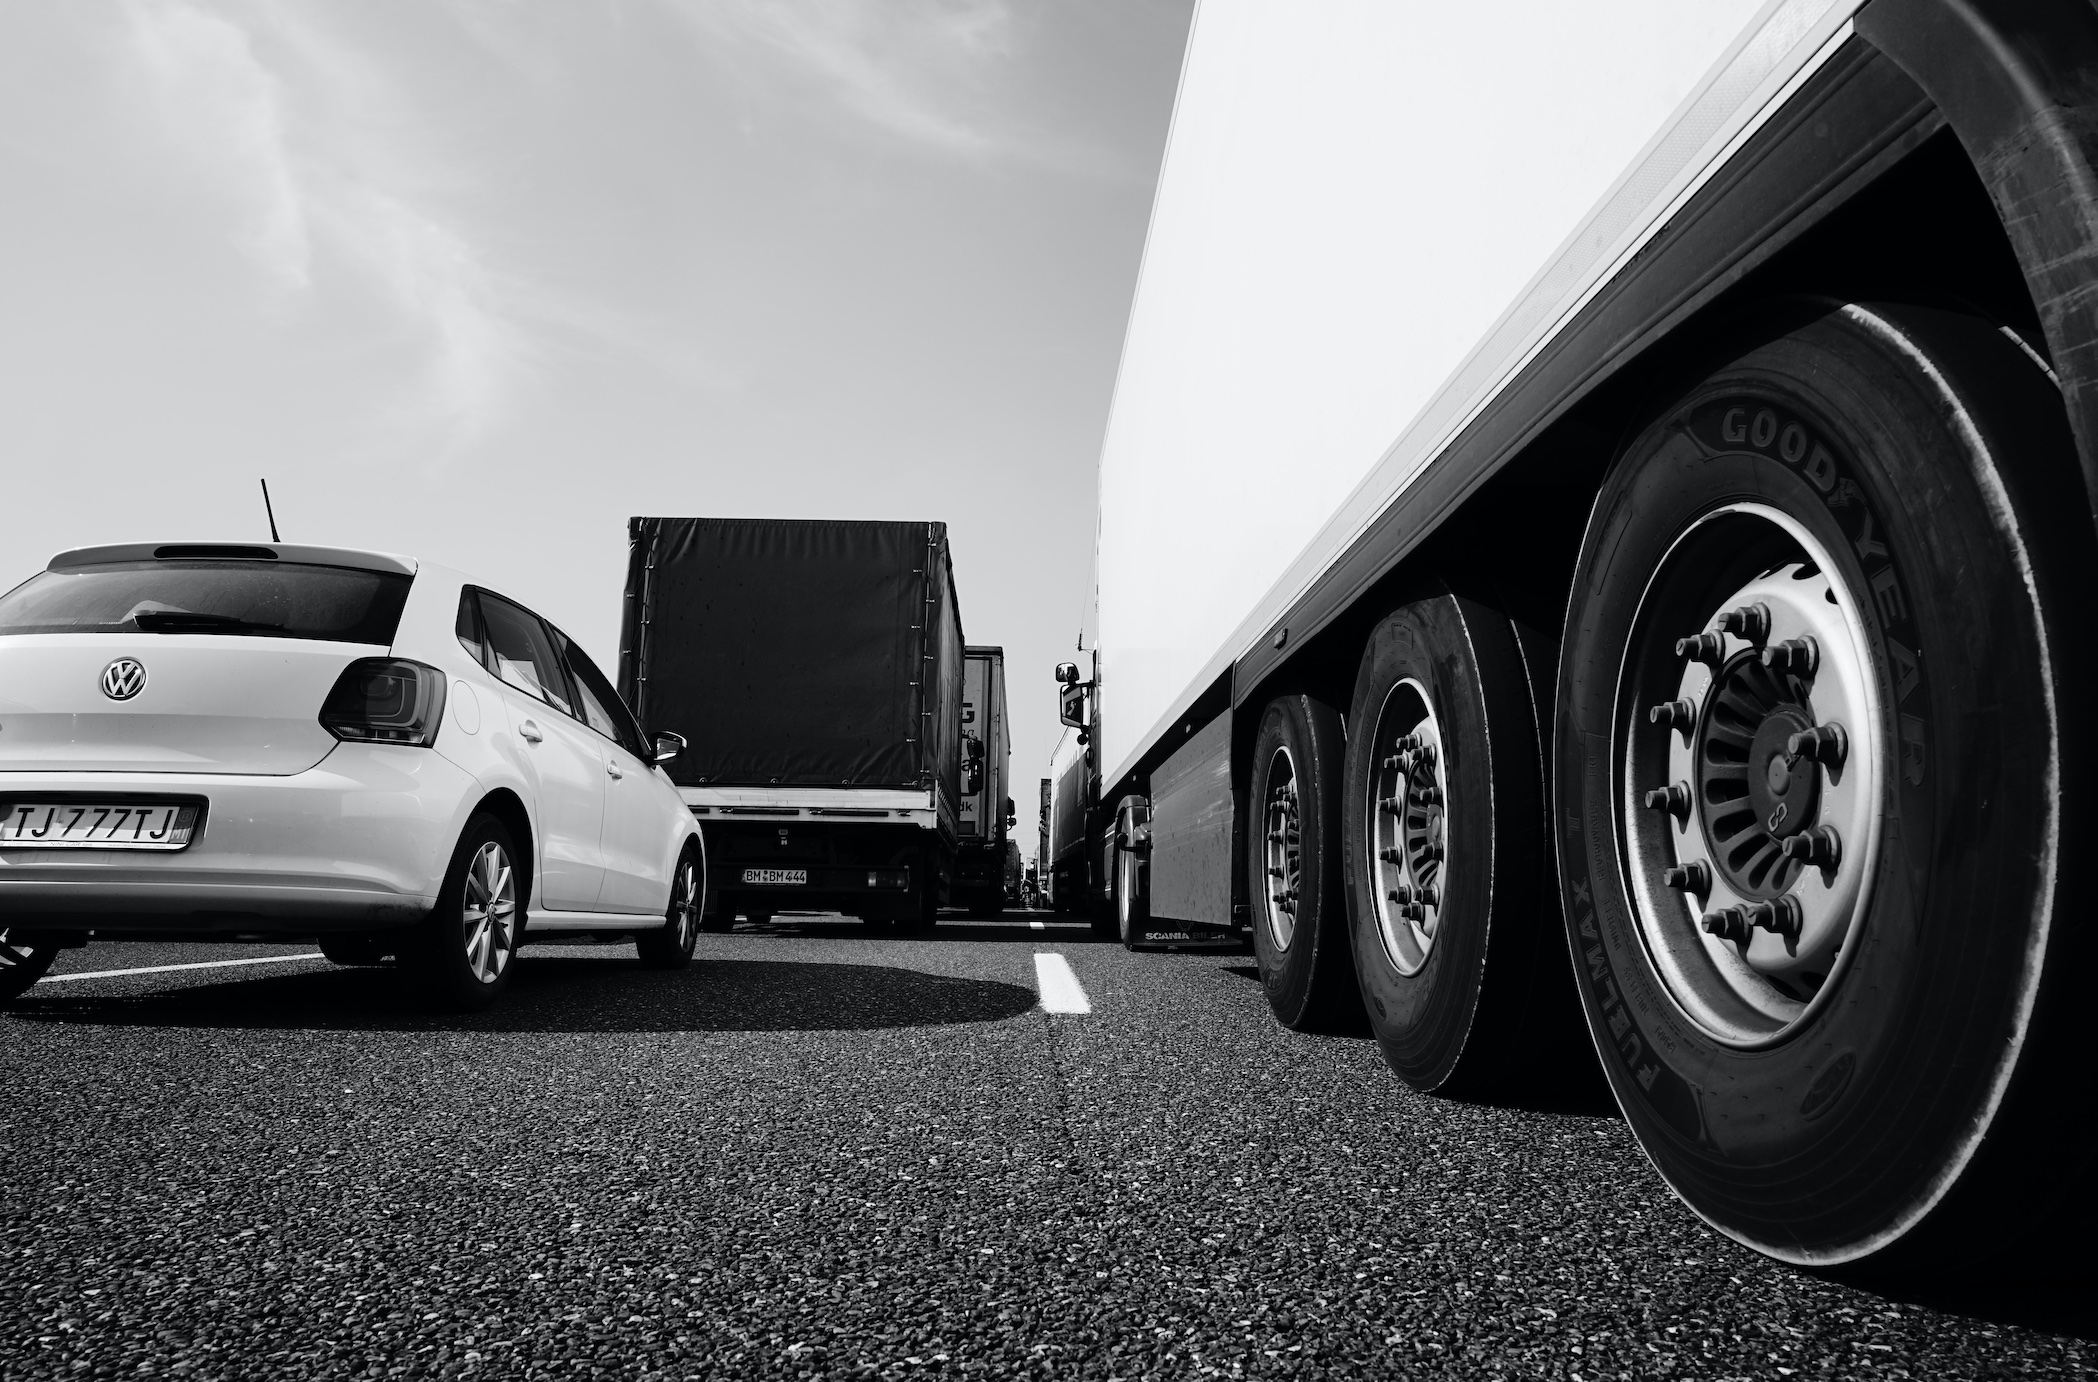 Black and white photo of semi-truck stuck in traffic jam, taken at wheel height; image by Wolfgang Hasselmann, via Unsplash.com.